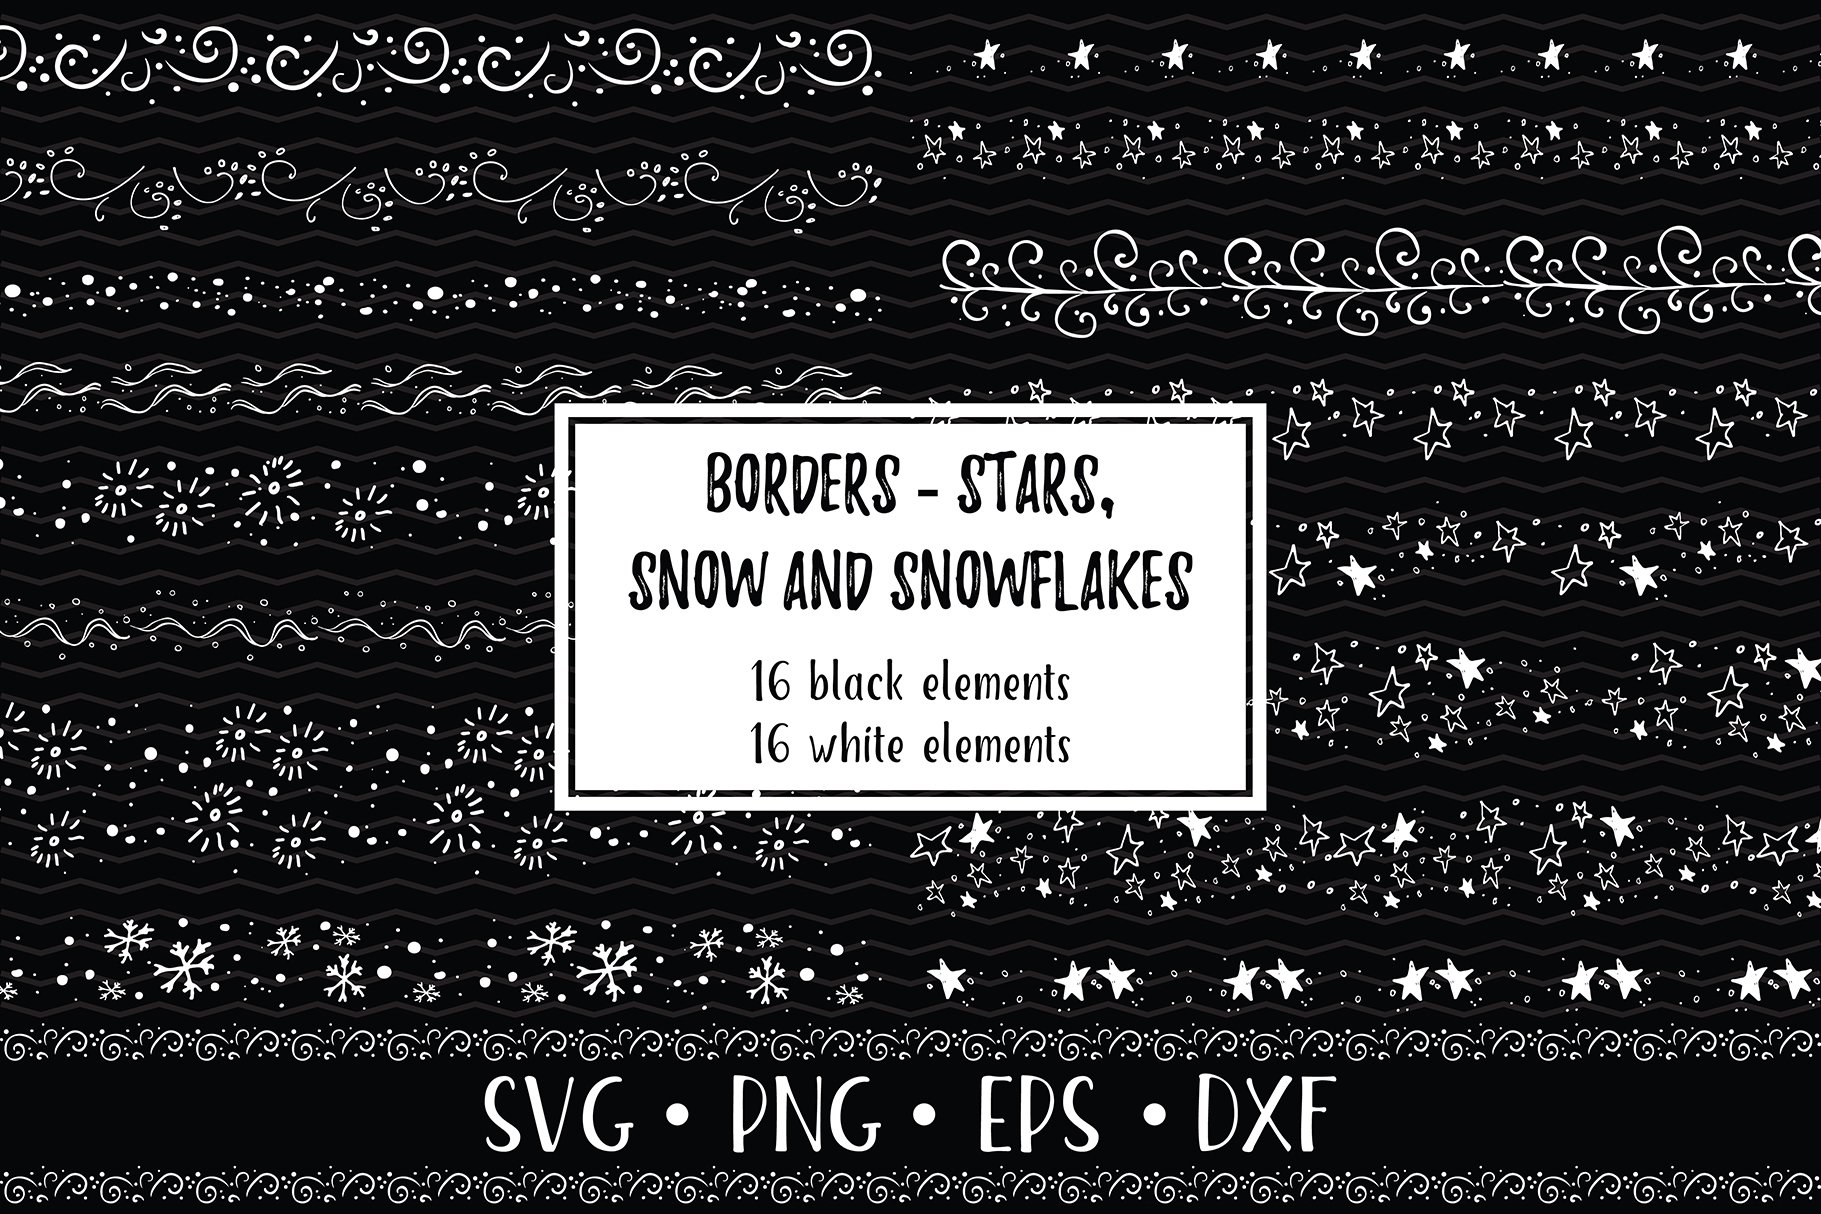 Winter Doodle Borderscover image.